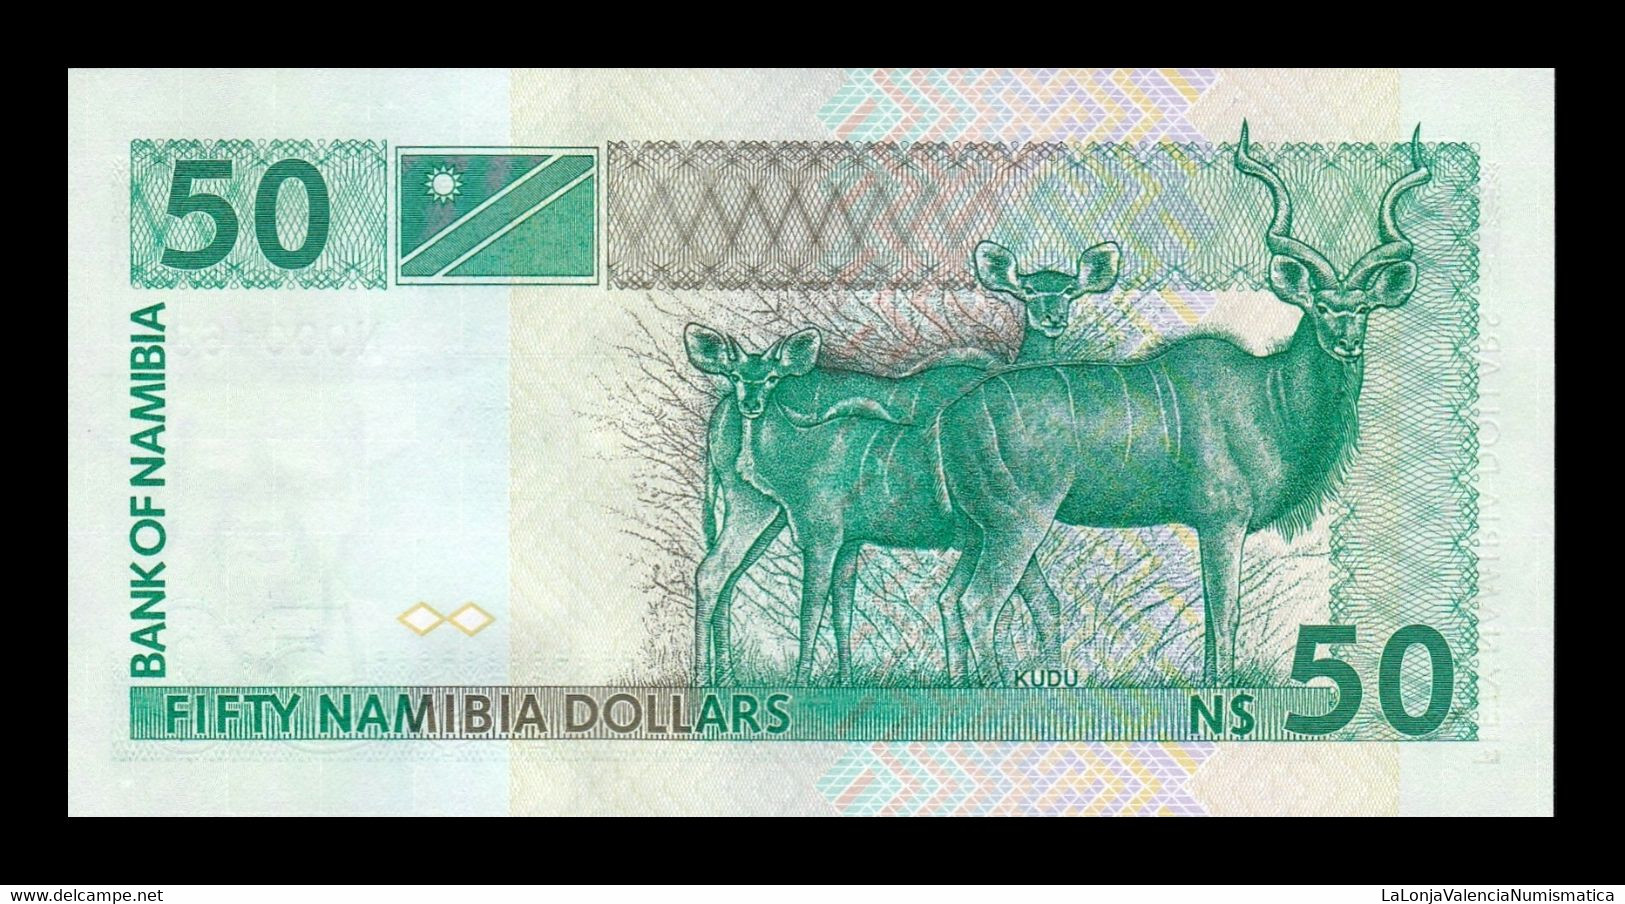 Namibia 50 Dollars 1993 Pick 2 Low Serial T.683 SC UNC - Namibia